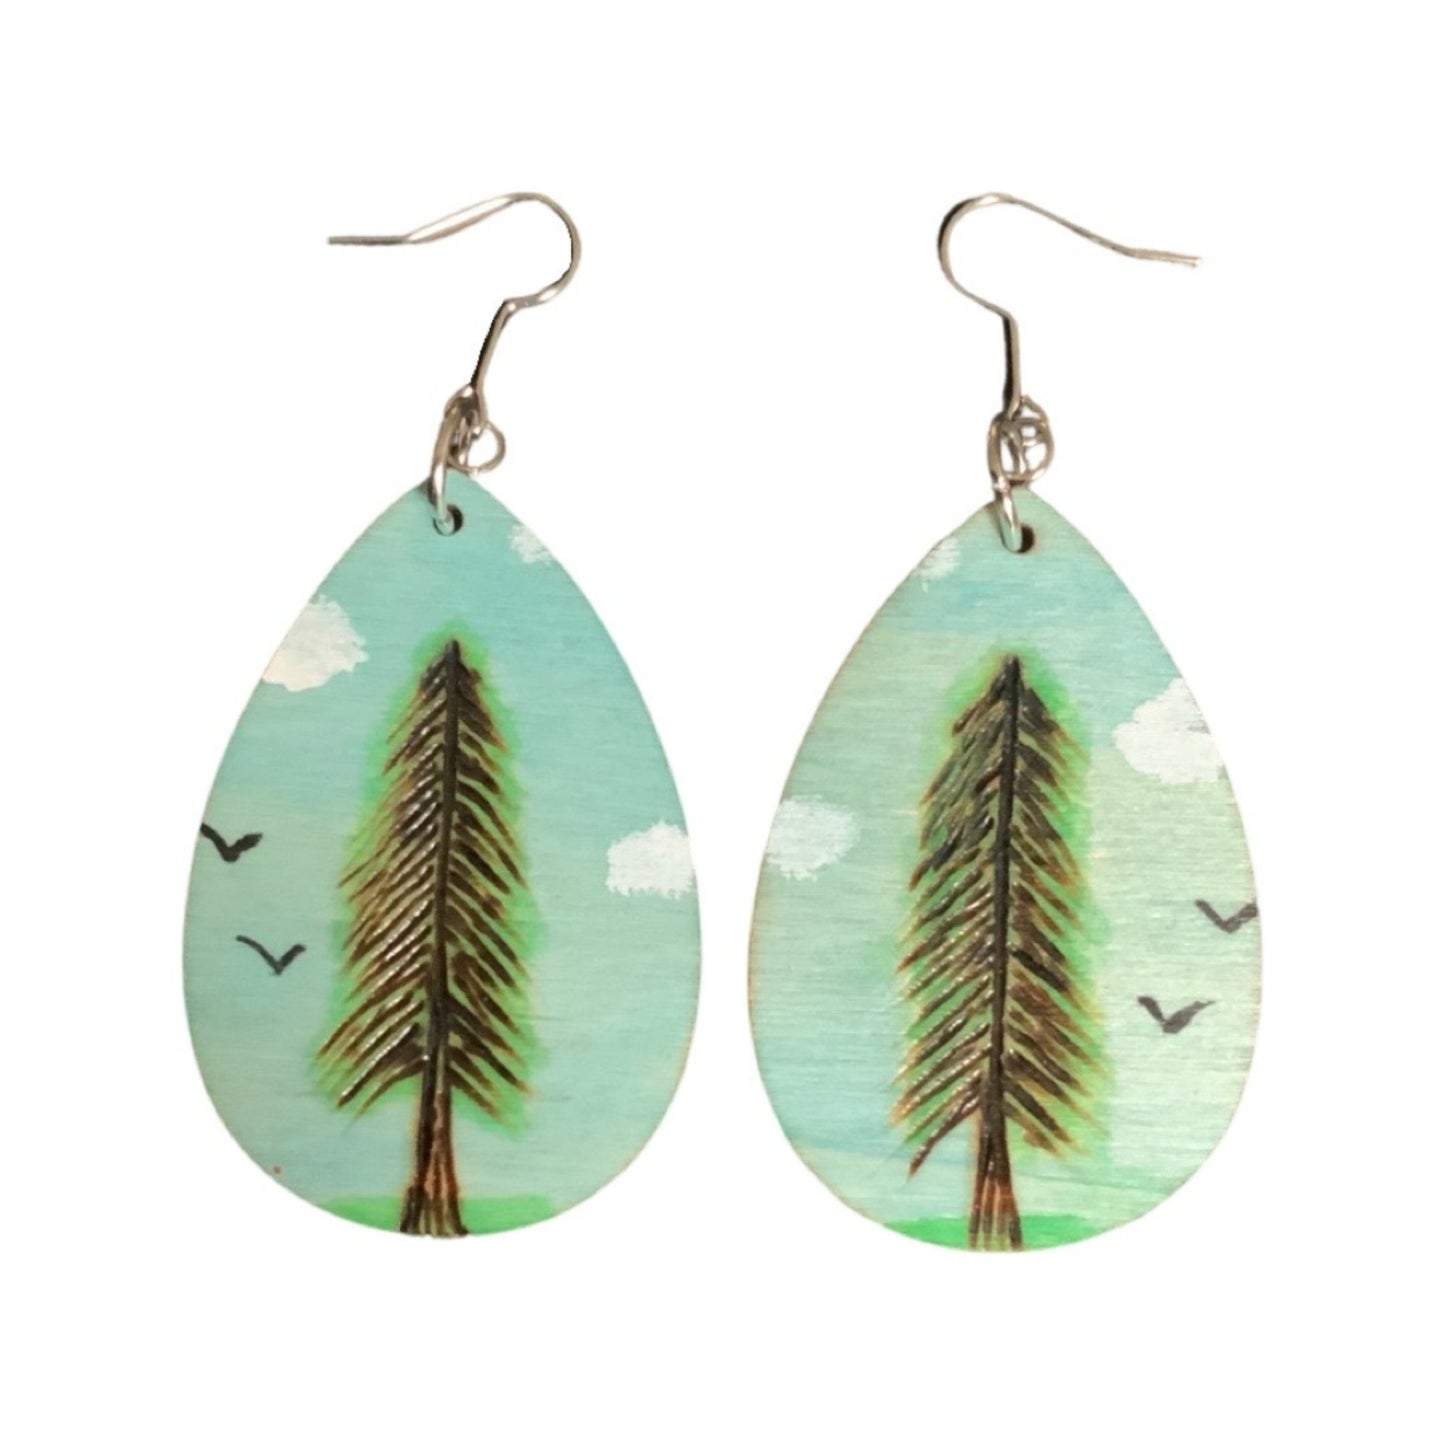 Pine Trees Birds Earrings Handmade Wood Burned and painted Fashion Light Weight Teardrop